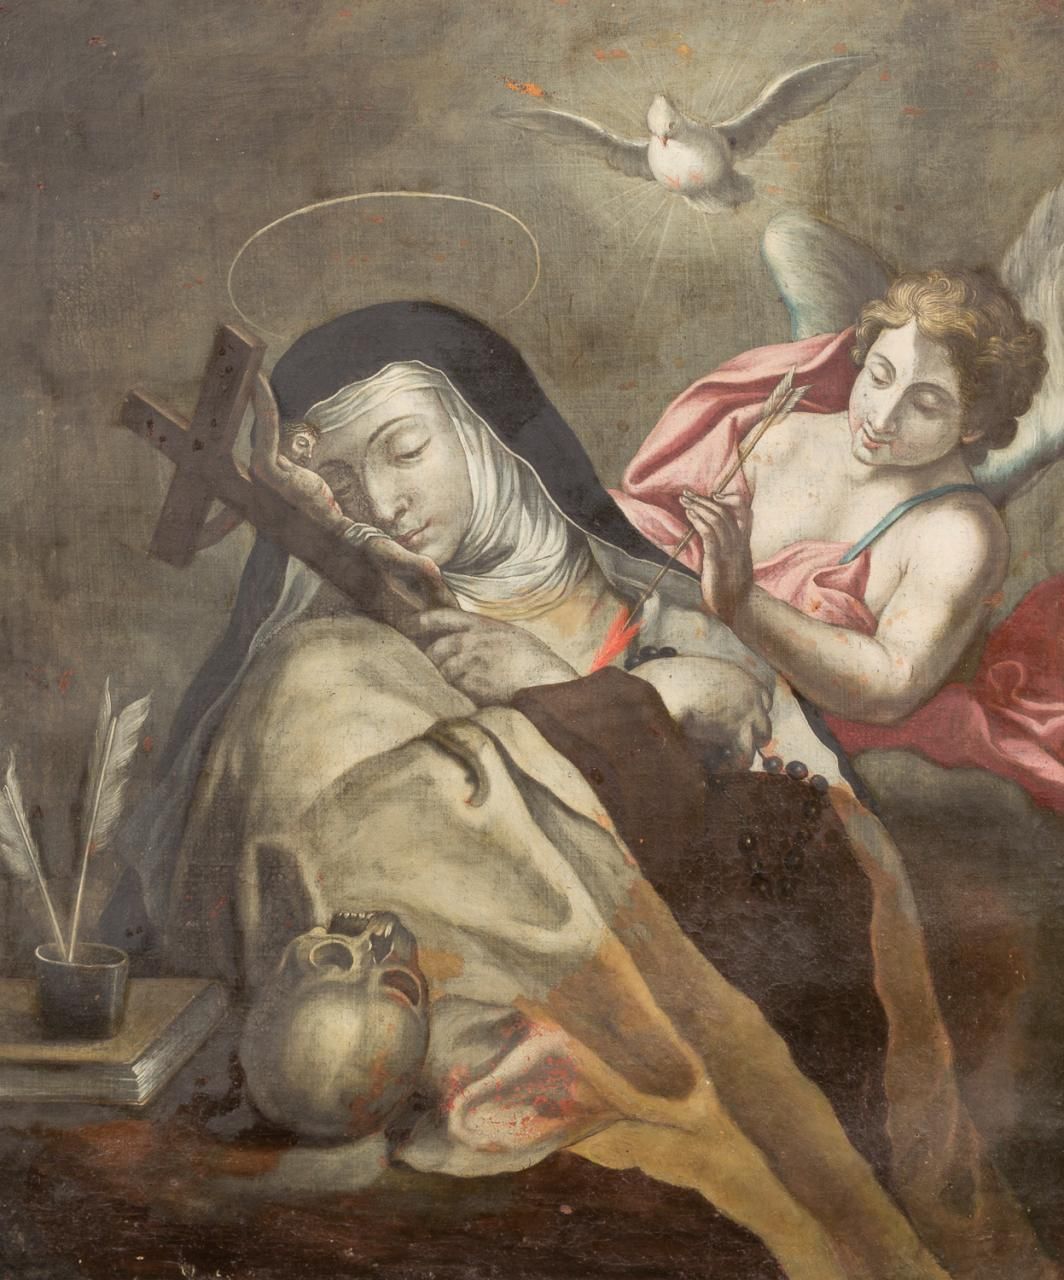 ESCUELA ITALIANA, S. XVII Éxtasis de Santa Teresa
Óleo sobre lienzo
77 x 64 cm